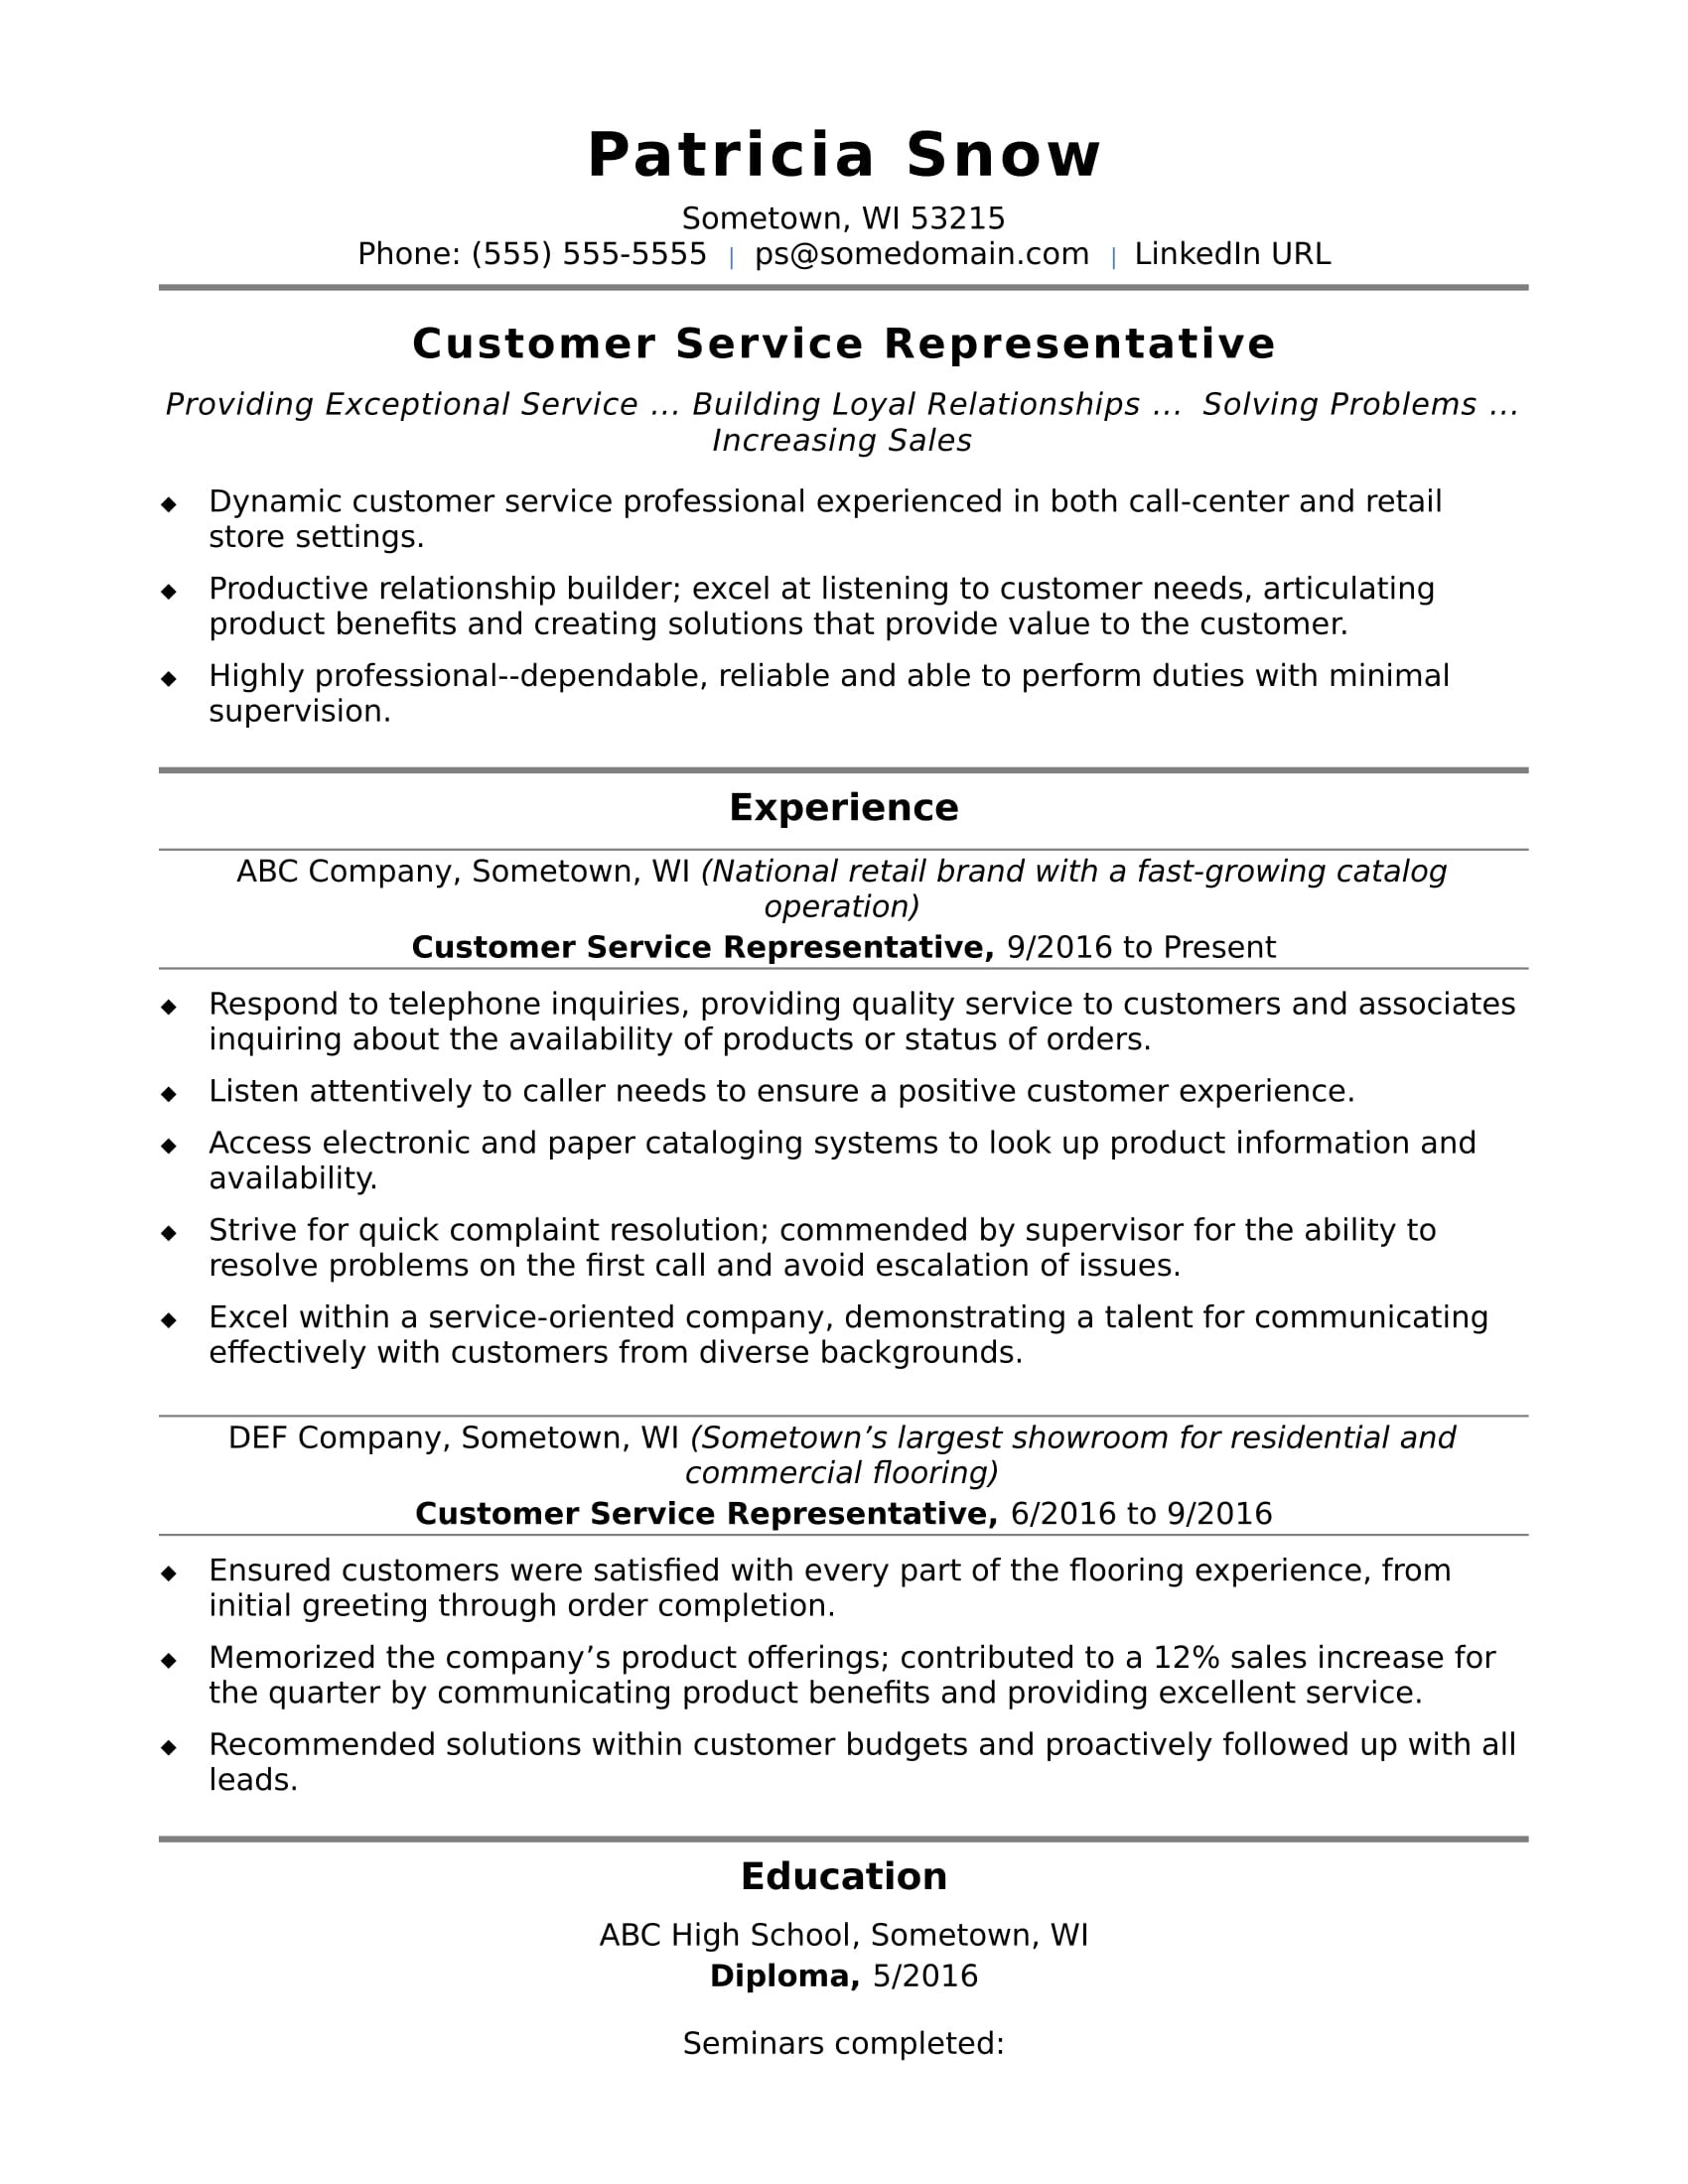 Sample Resume for Customer Service Healthcare Entry-level Customer Service Resume Sample Monster.com